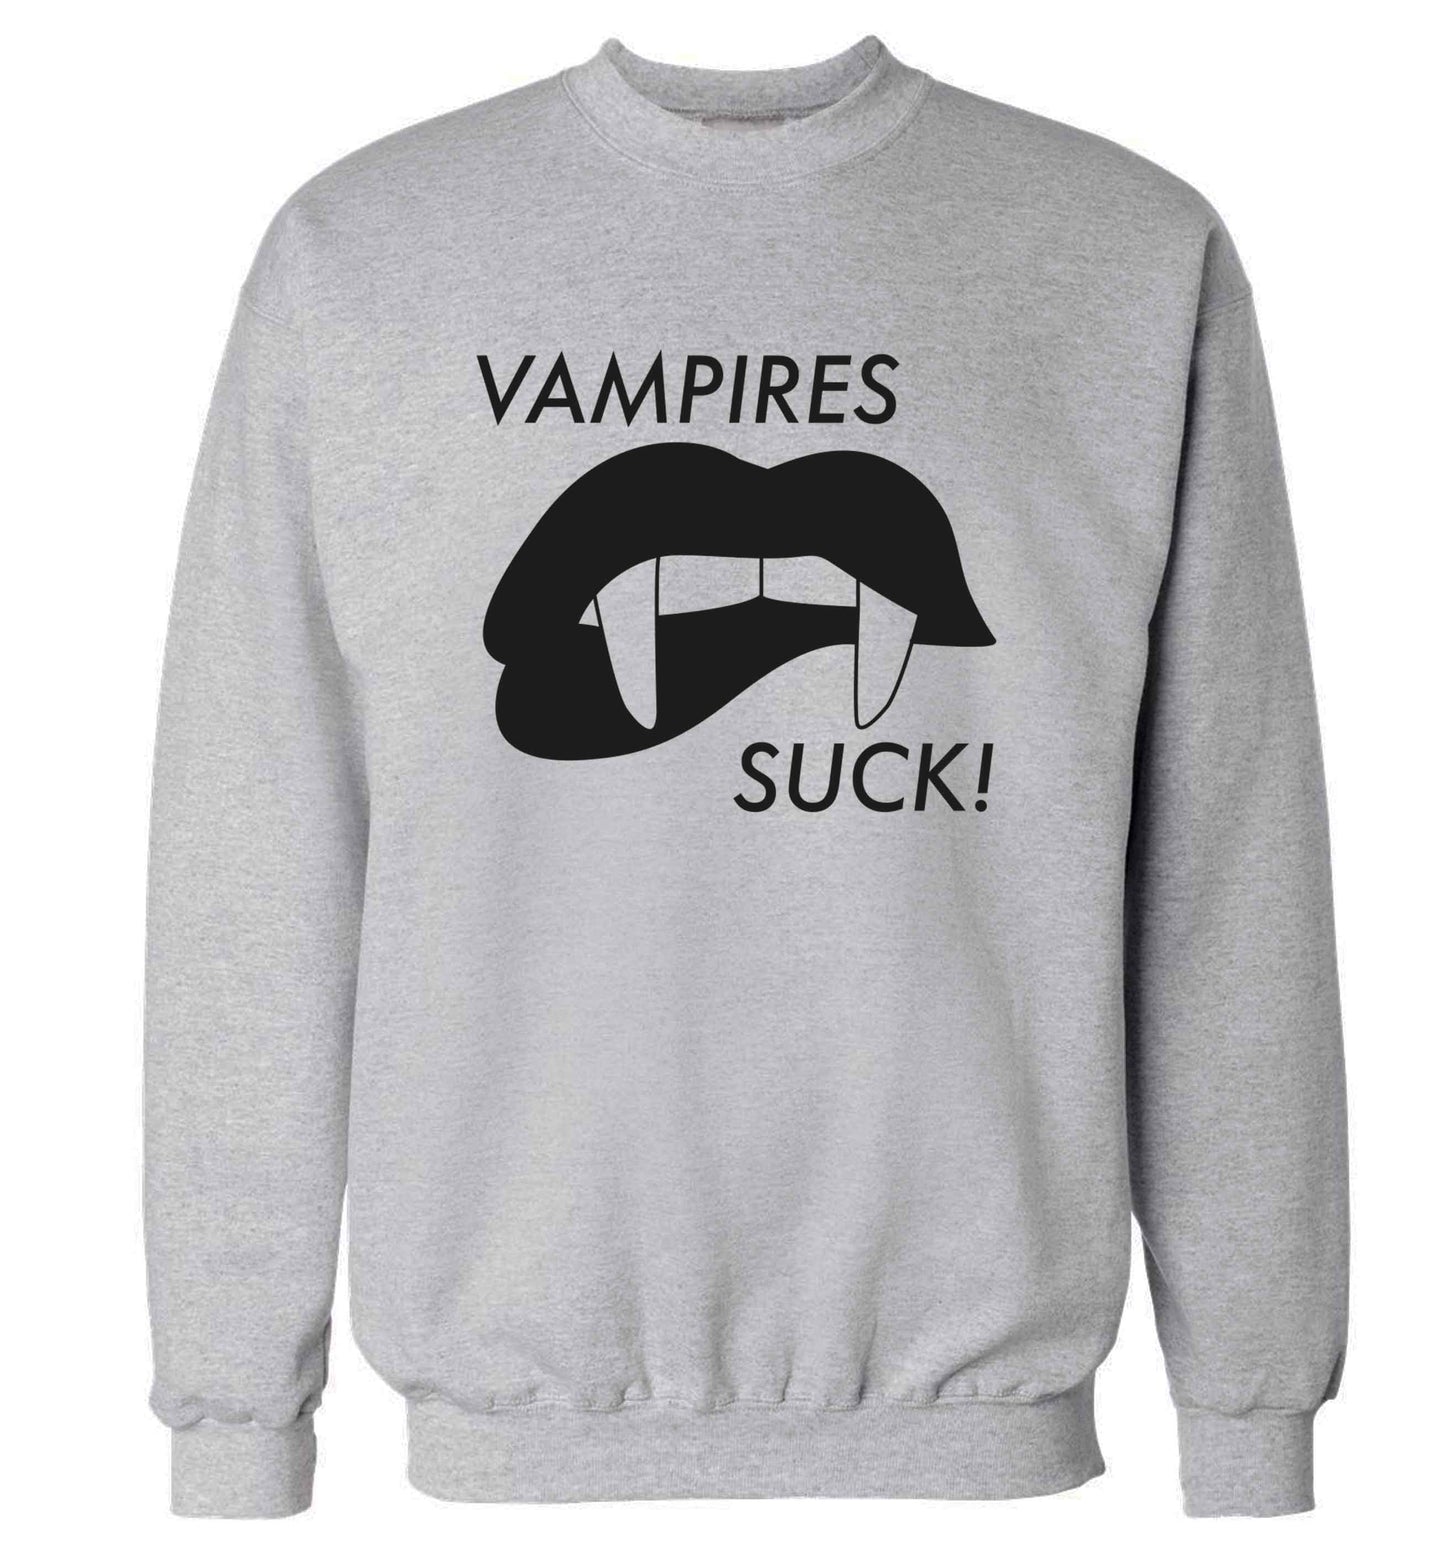 Vampires suck adult's unisex grey sweater 2XL